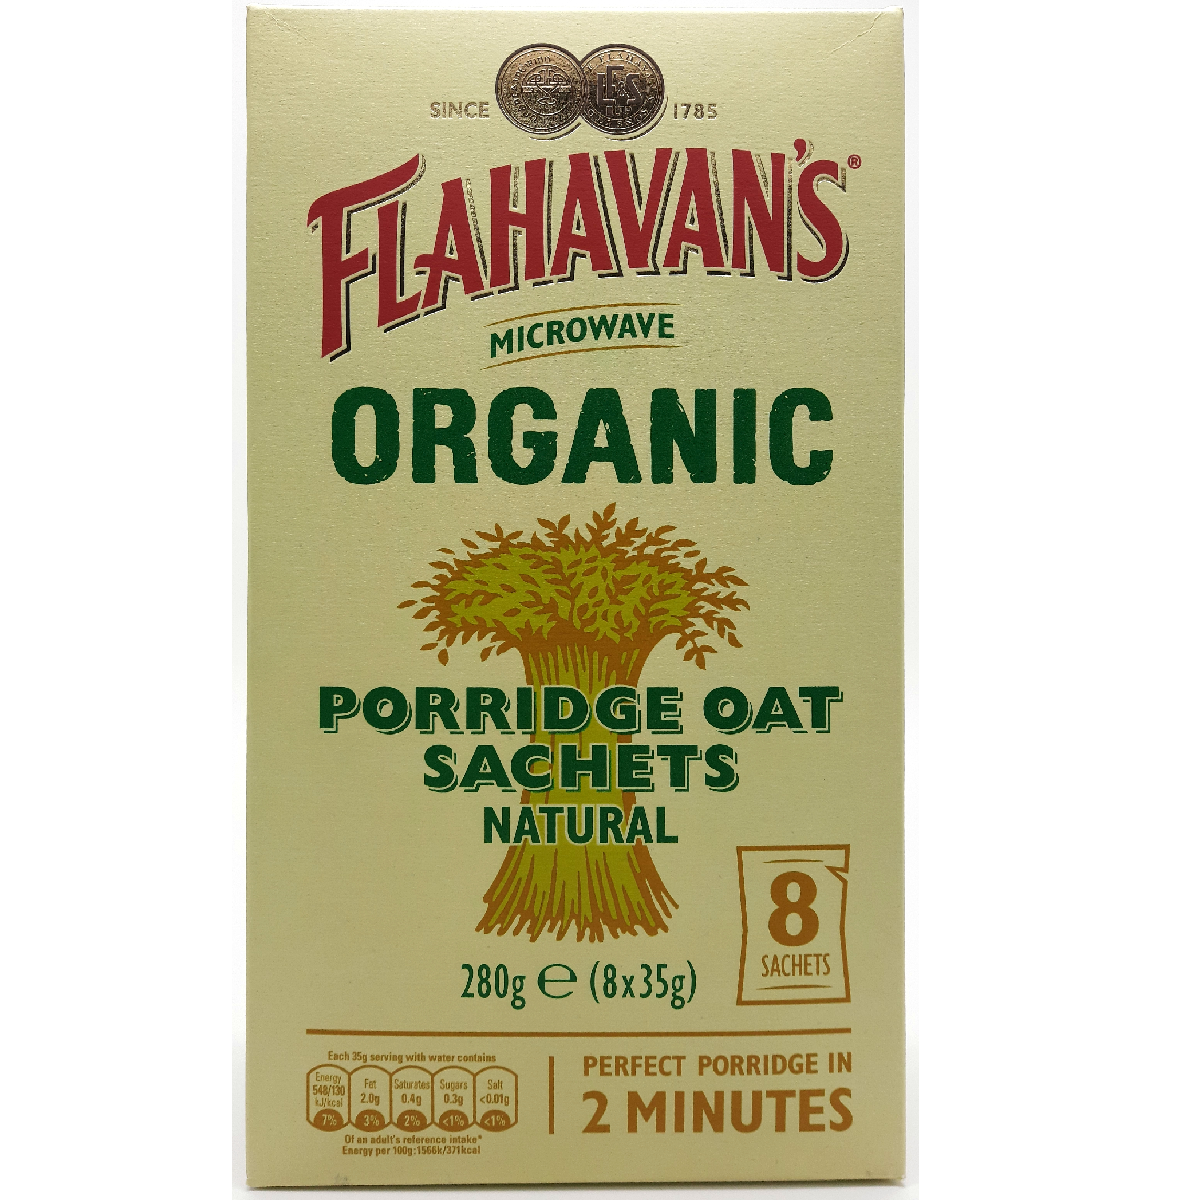 Flahavan&#39;s Microwave Organic Porridge Oat Natural 280g x8 sachets